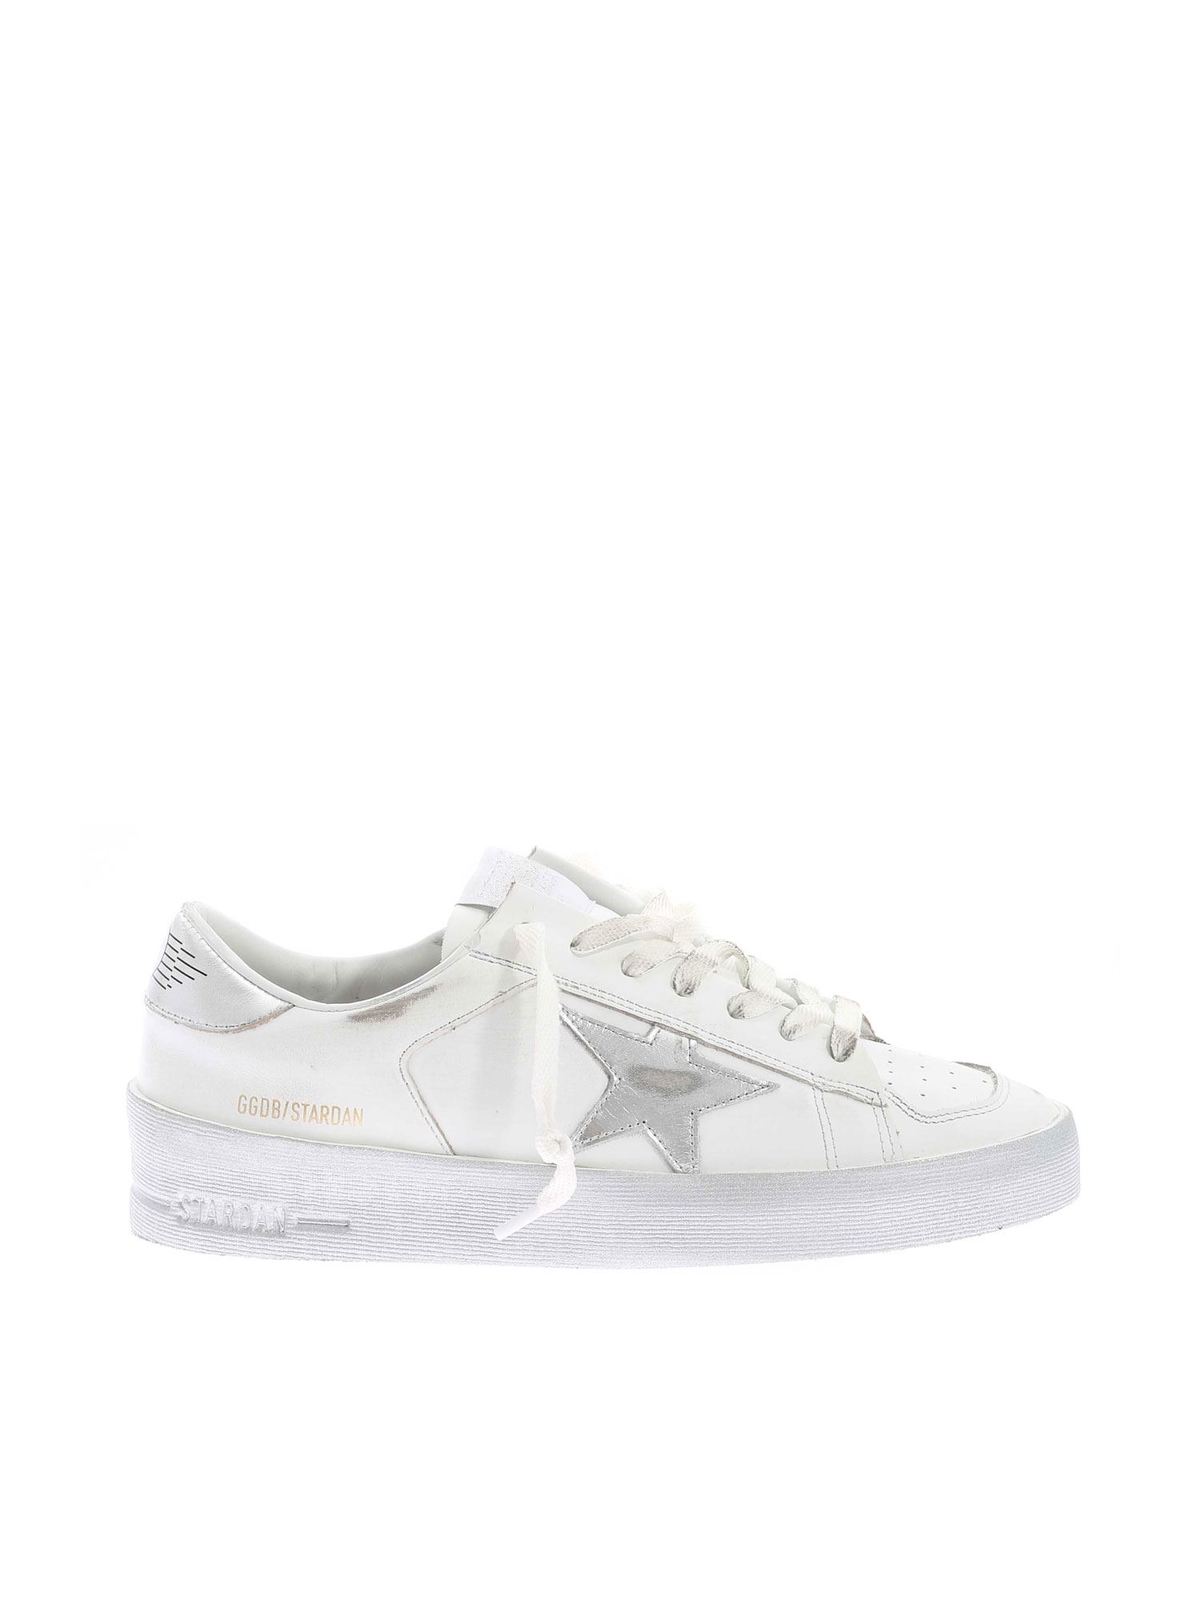 Golden Goose Stardan Sneakers In White And Silver In Blanco